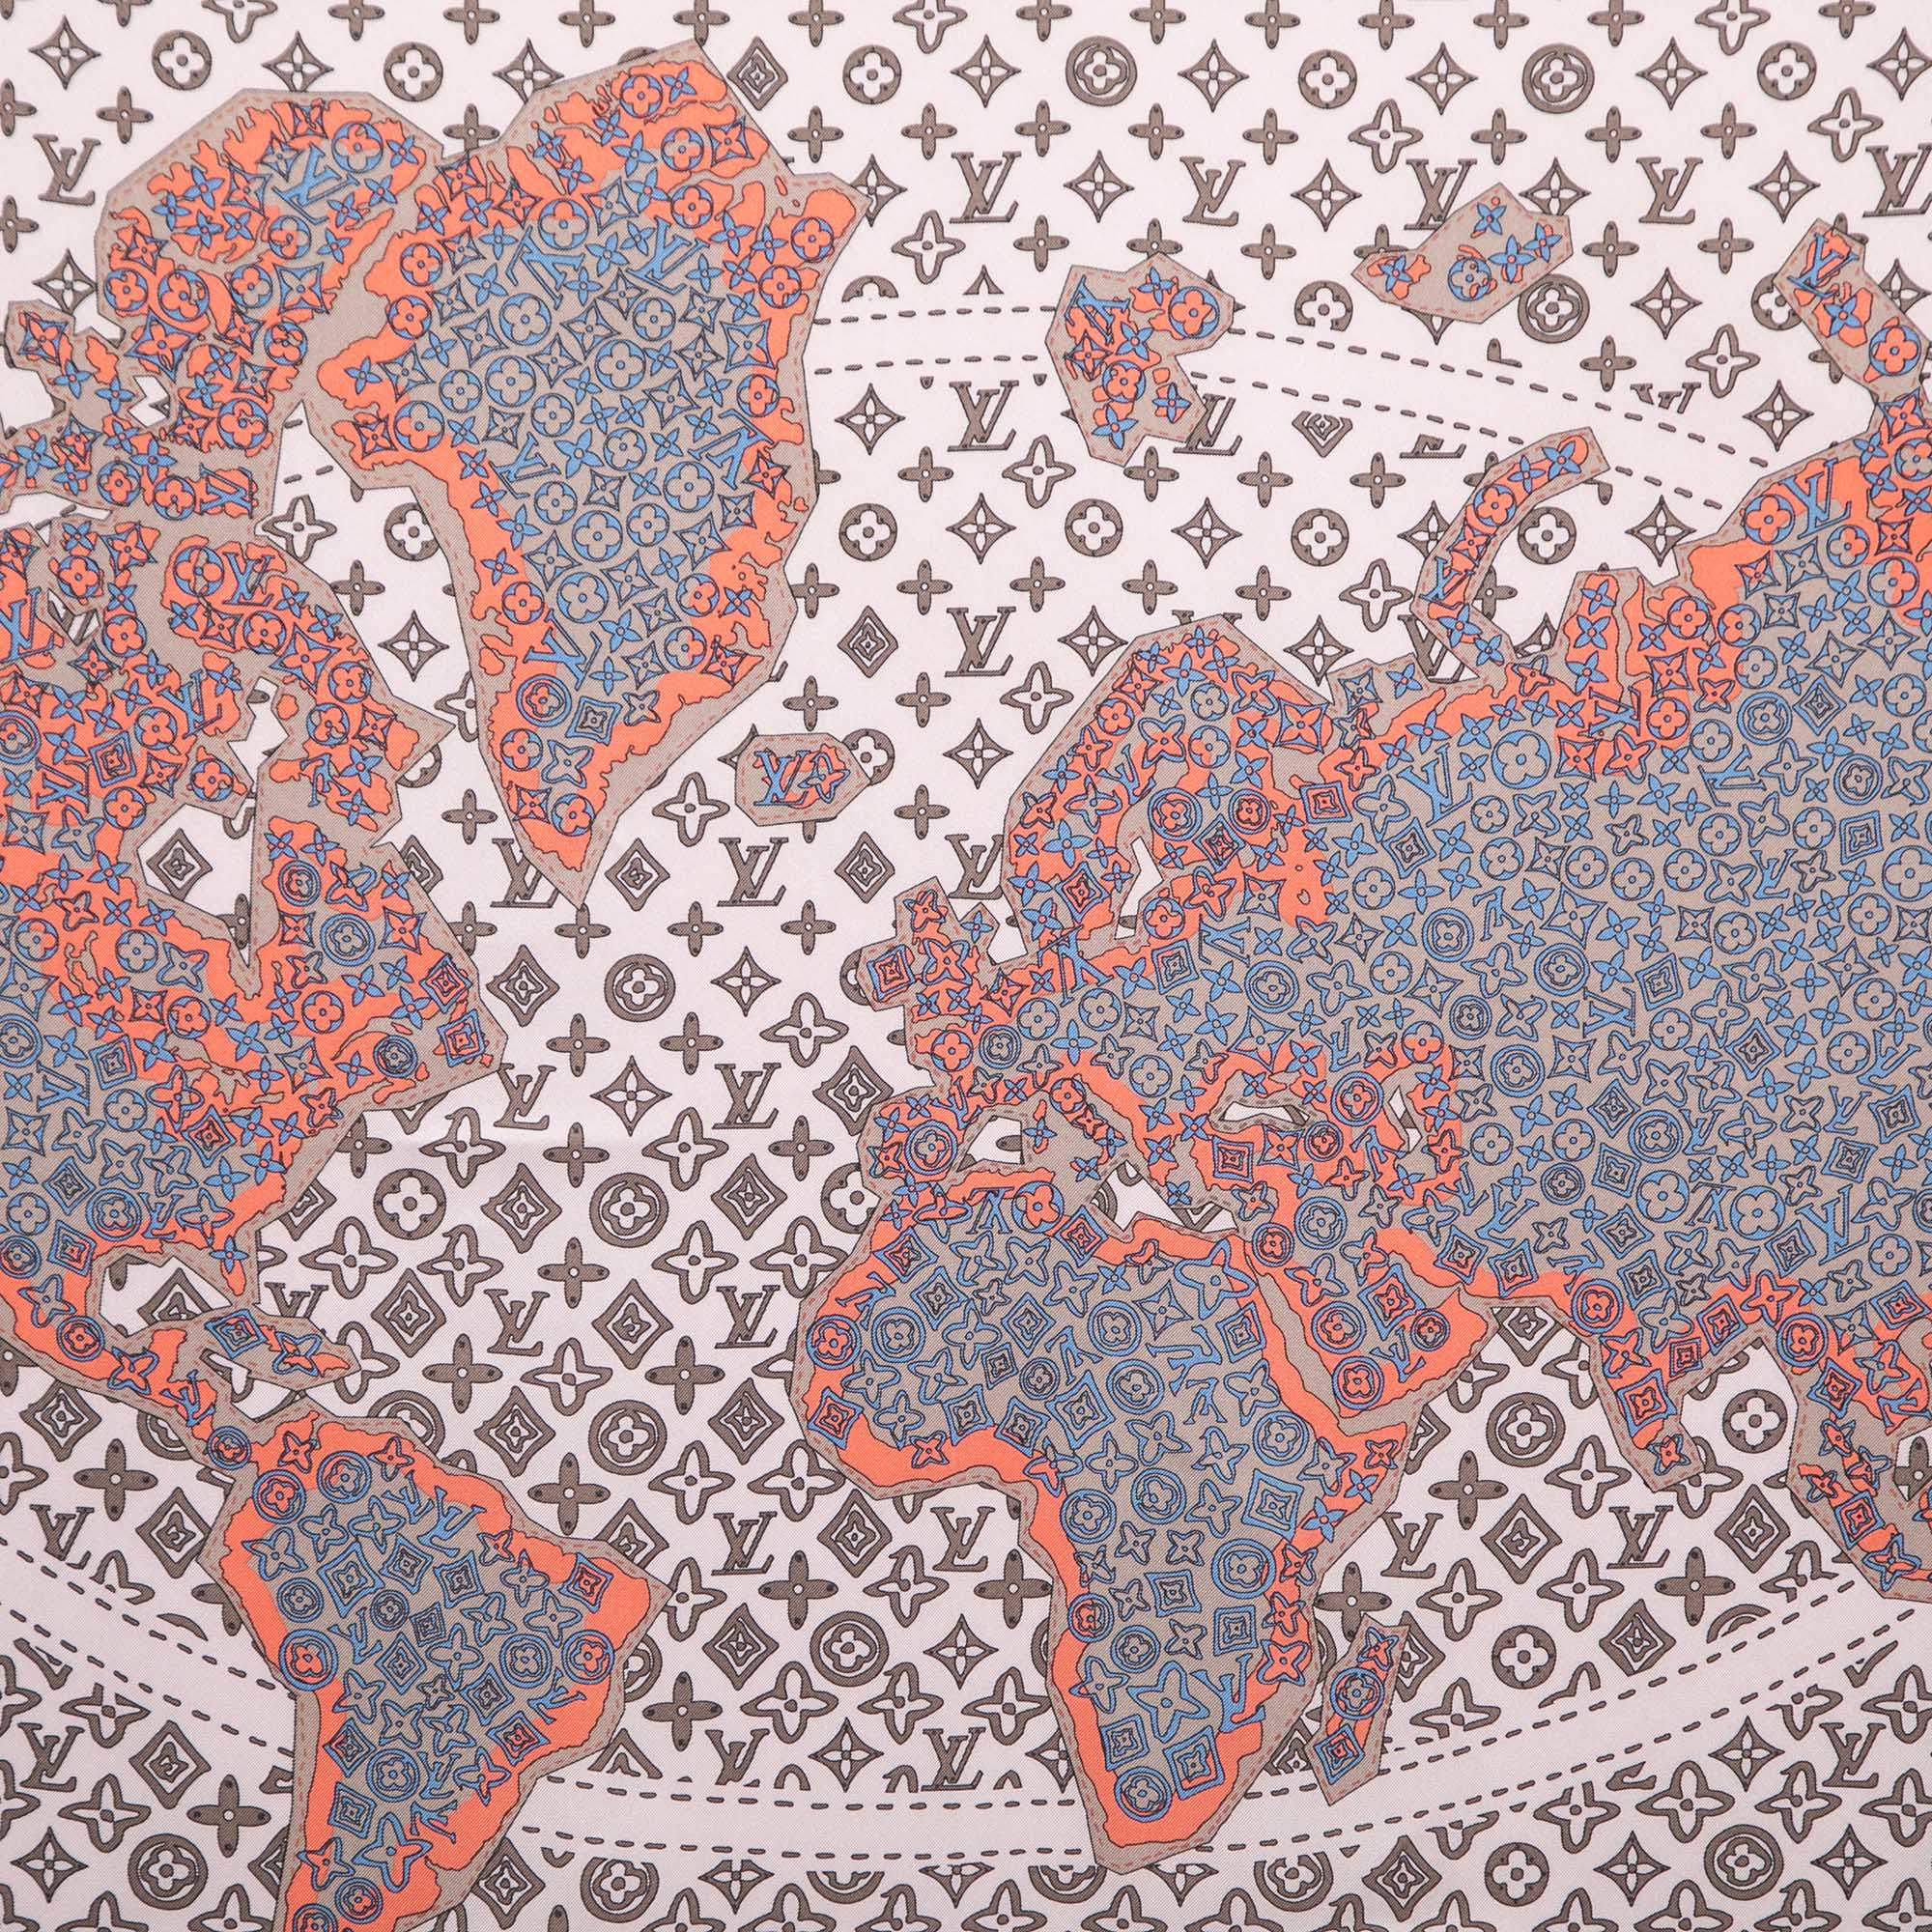 Louis Vuitton World Map Scarf